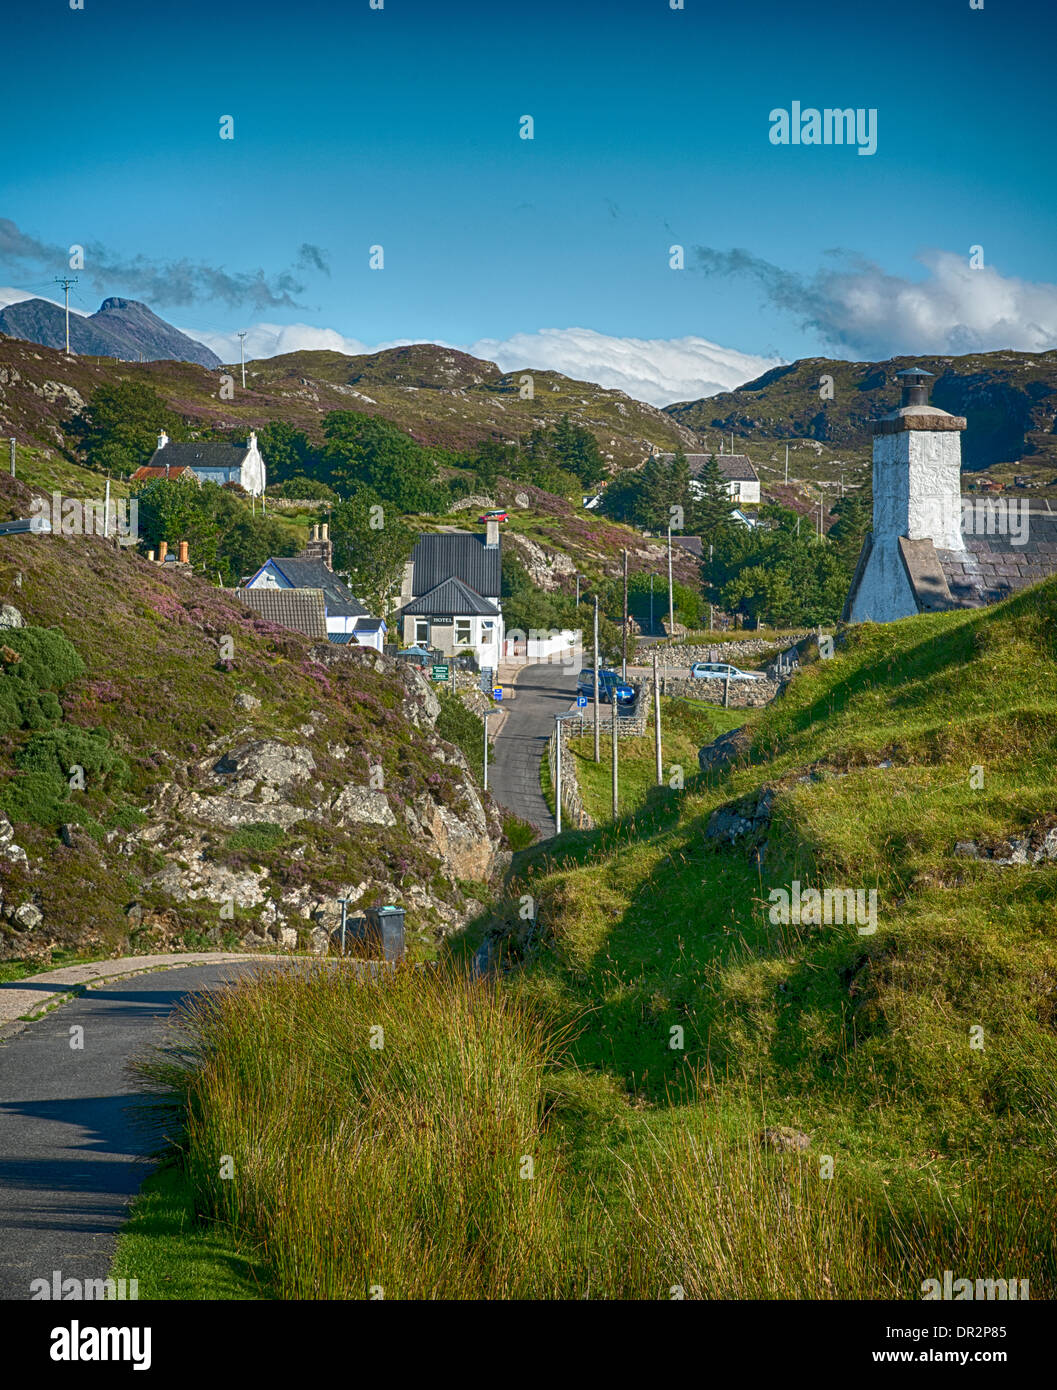 Vista de la aldea de Drumbeg, Highlands Escocesas. Foto de stock